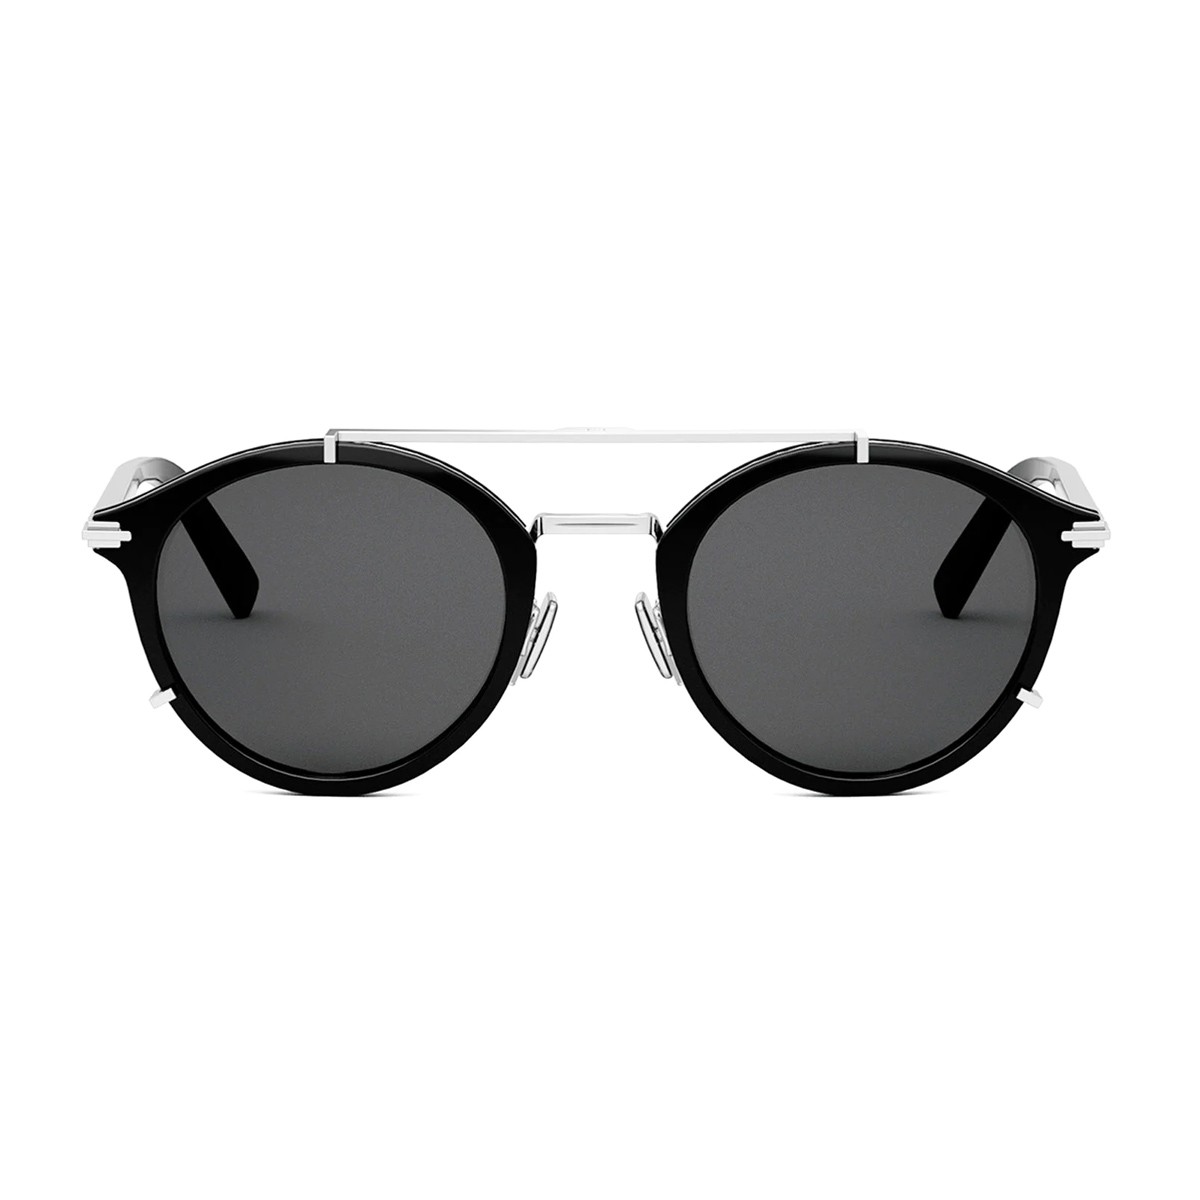 Dior Sunglasses - Buy Dior Sunglasses online in India